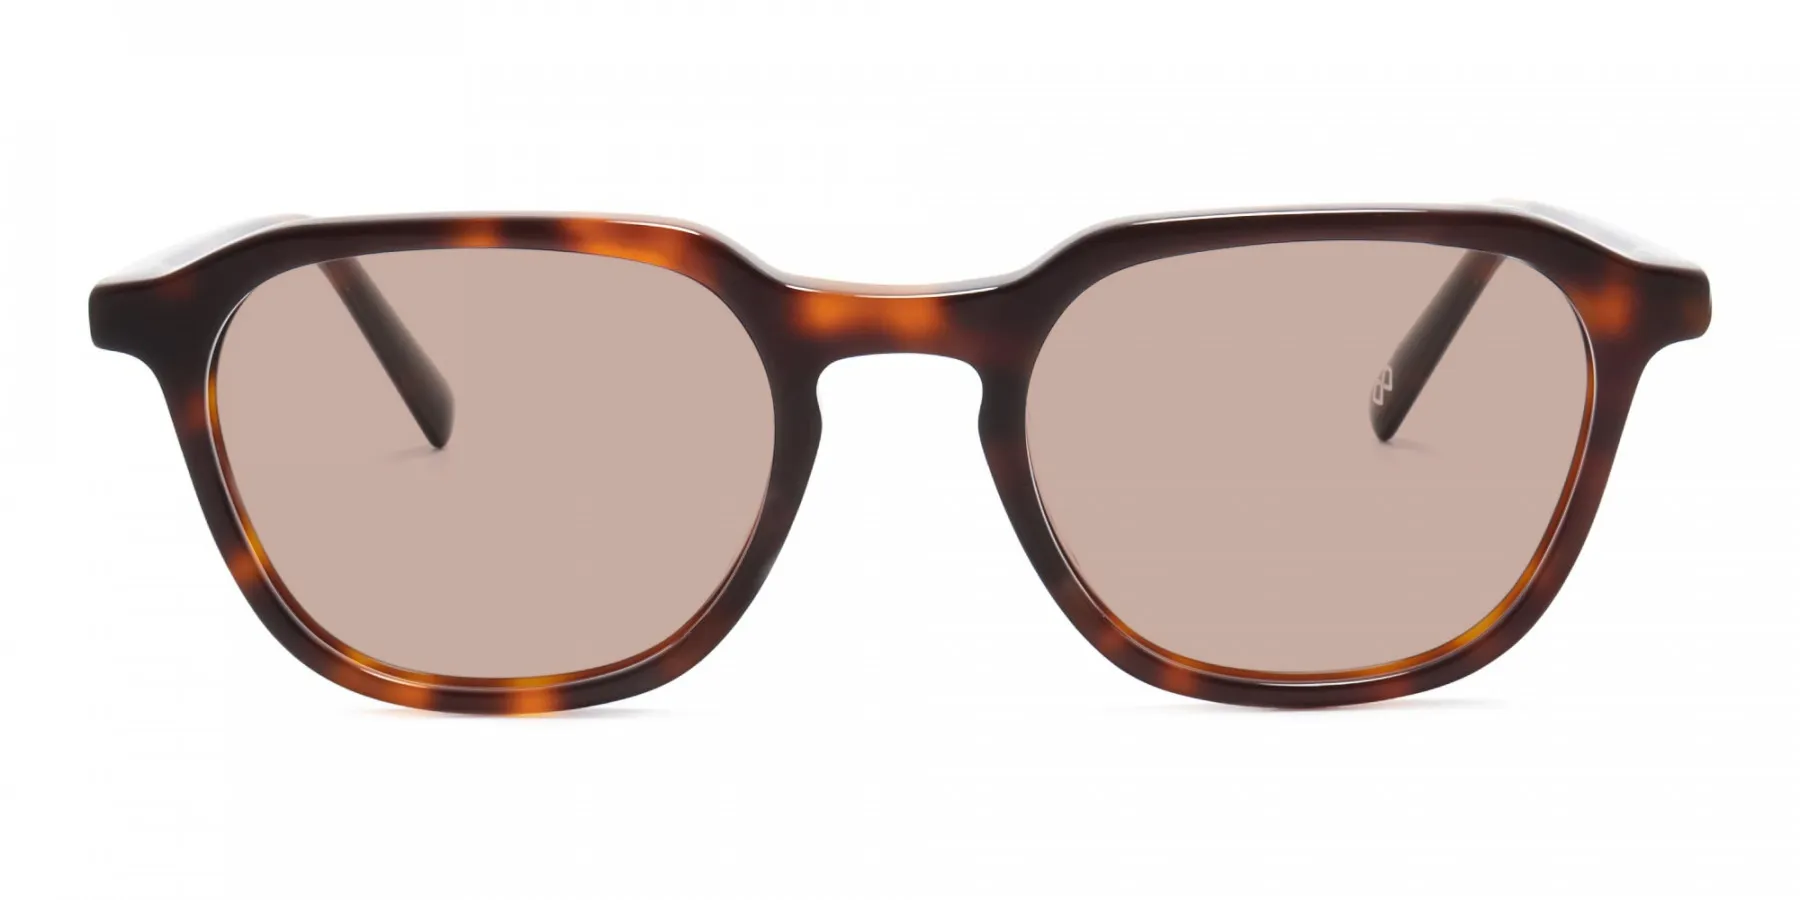 Geometric Shape Sunglasses With Brown Tint-1